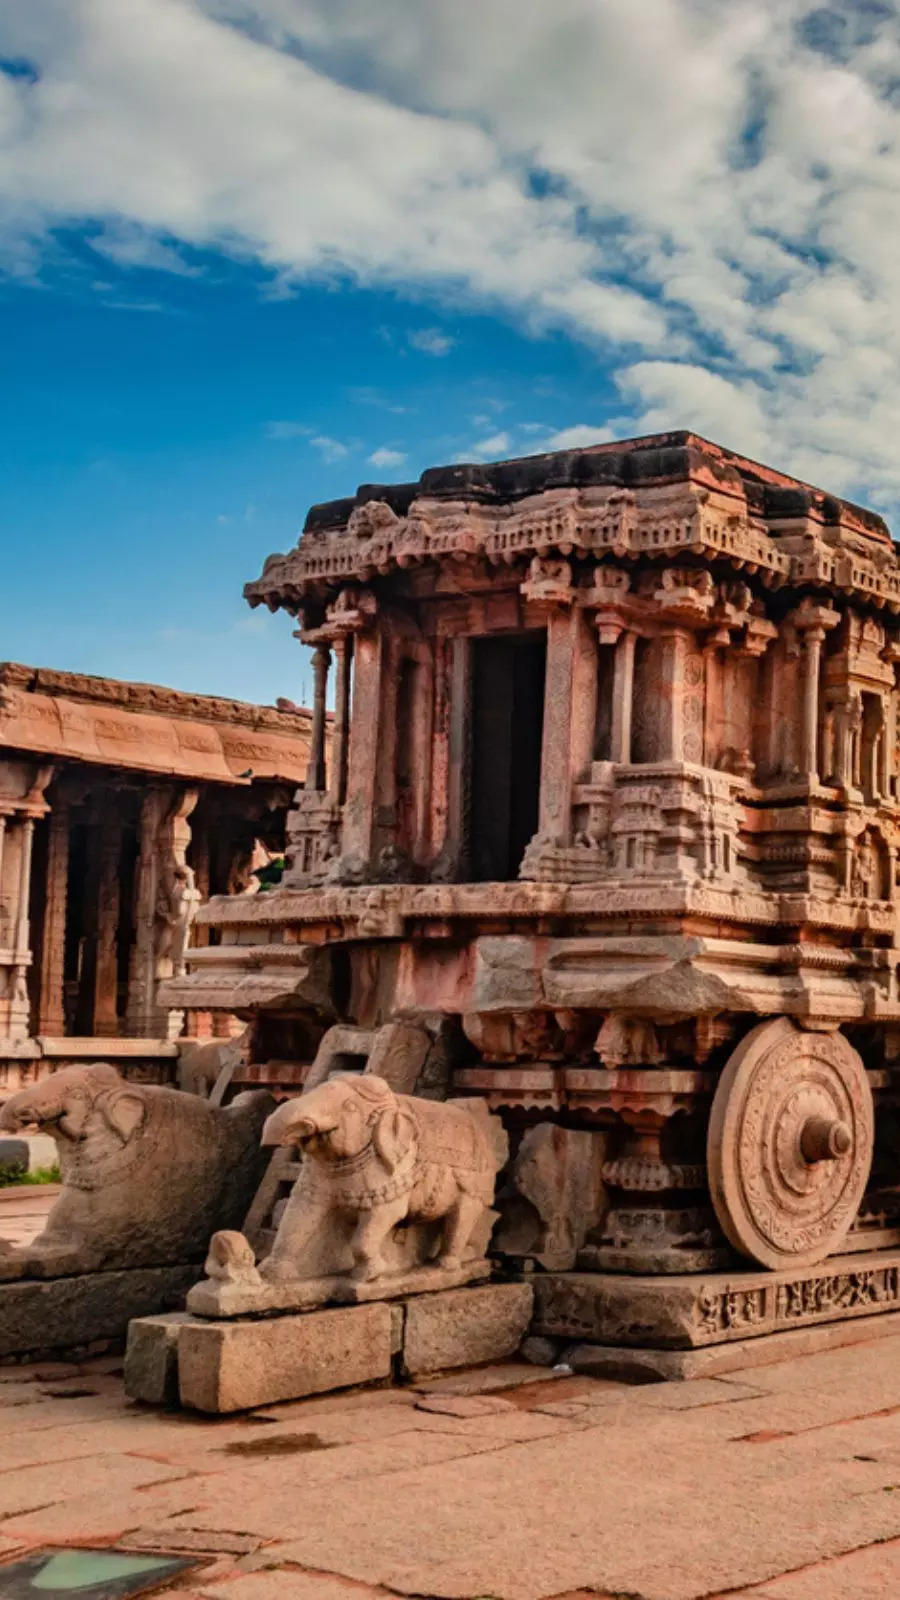 A UNESCO World Heritage Site, Hampi features ancient ruins of the Vijayanagara Empire amidst surreal boulder-strewn landscapes.